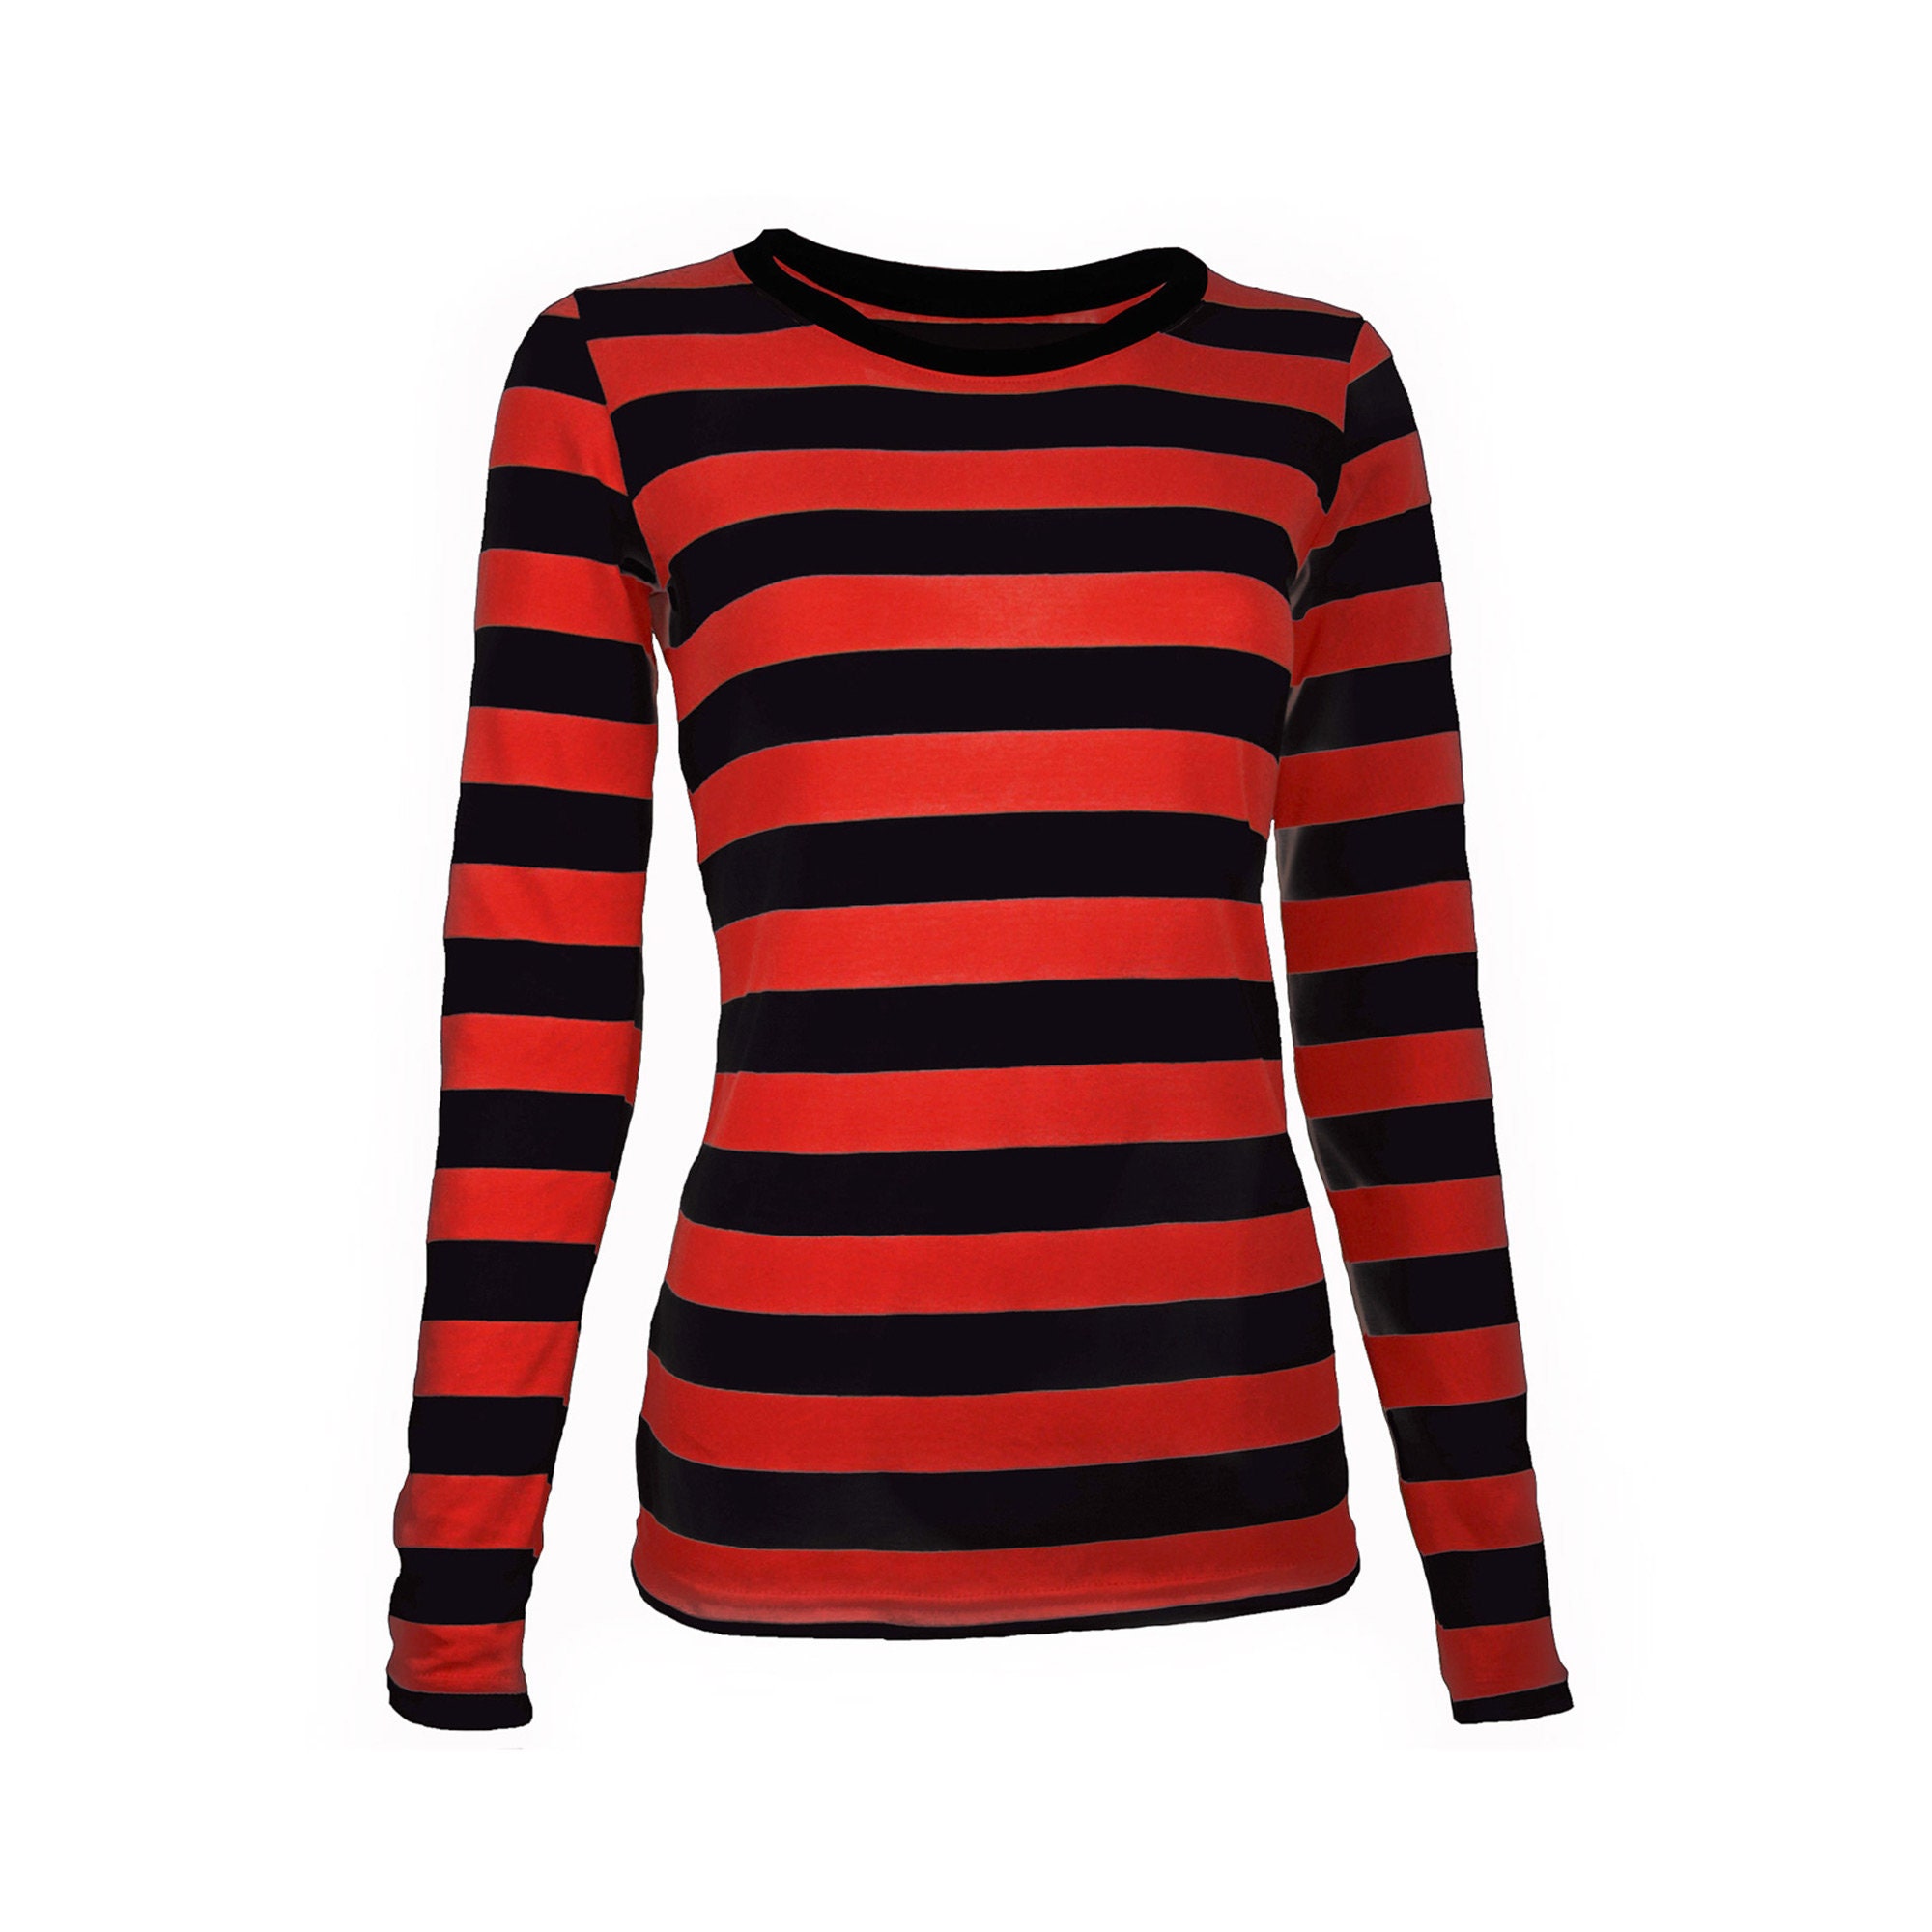 Women's Long Sleeve Black & Red Striped Shirt 